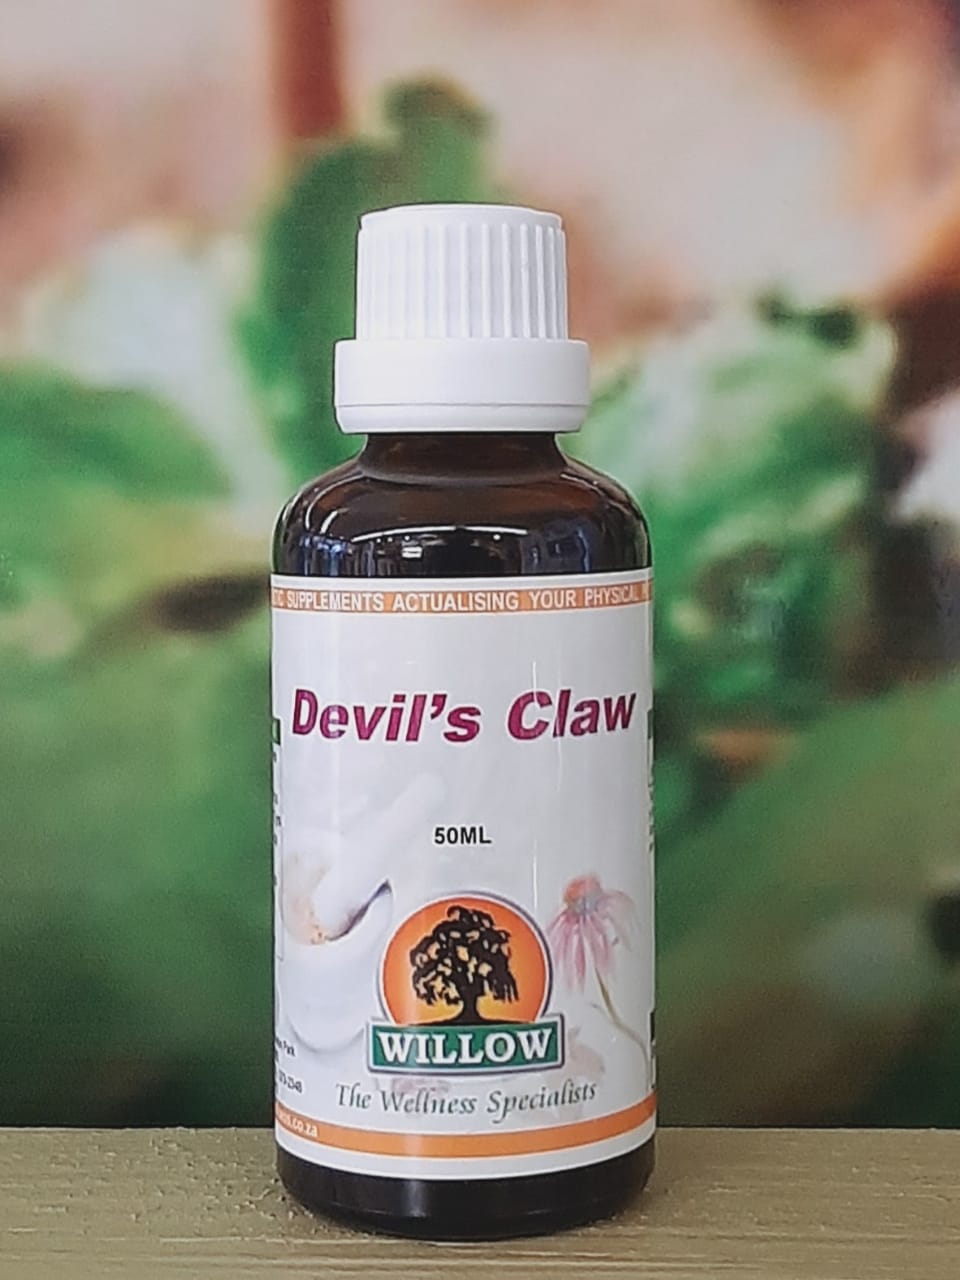 Willow Devil's Claw drops 50ml